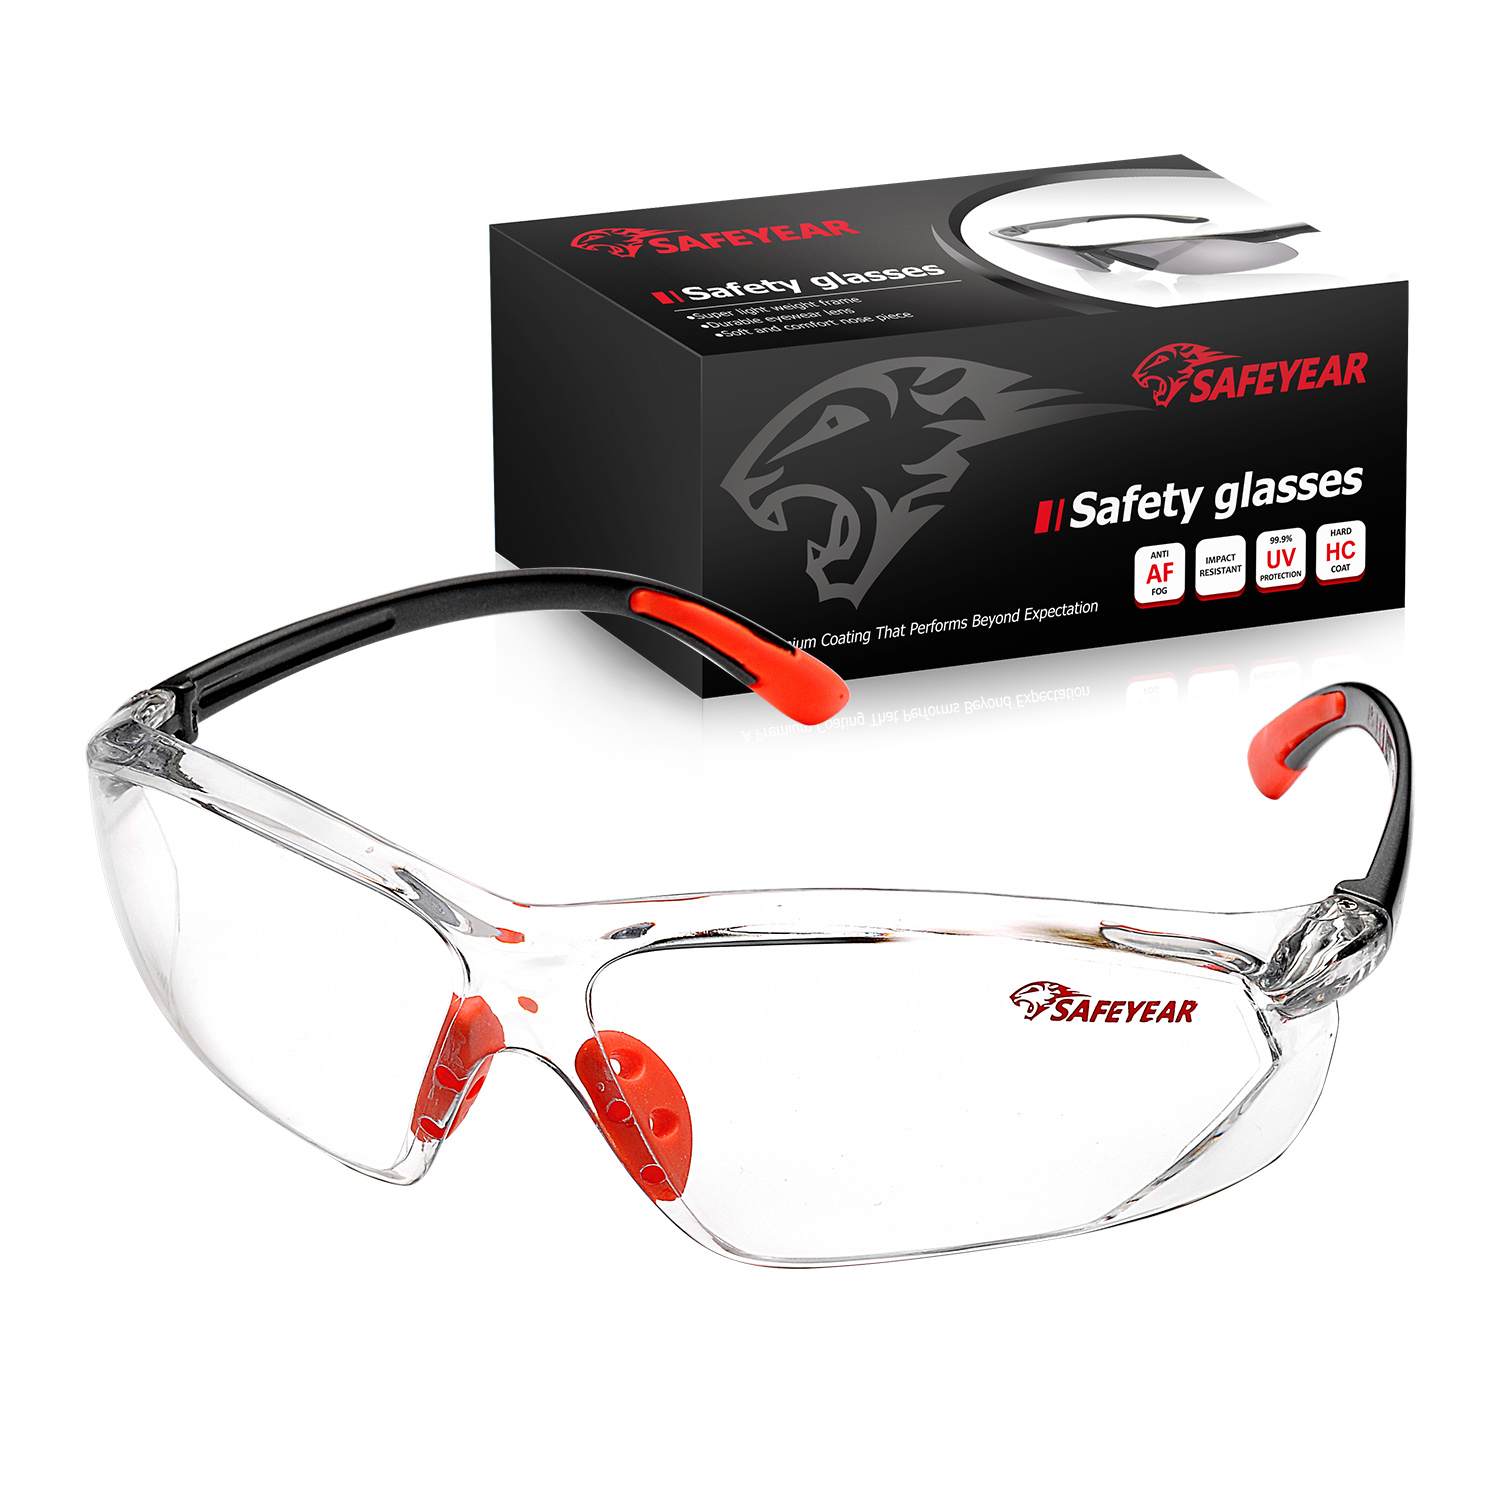 Gafas de seguridad con lentes transparentes SG003 Naranja